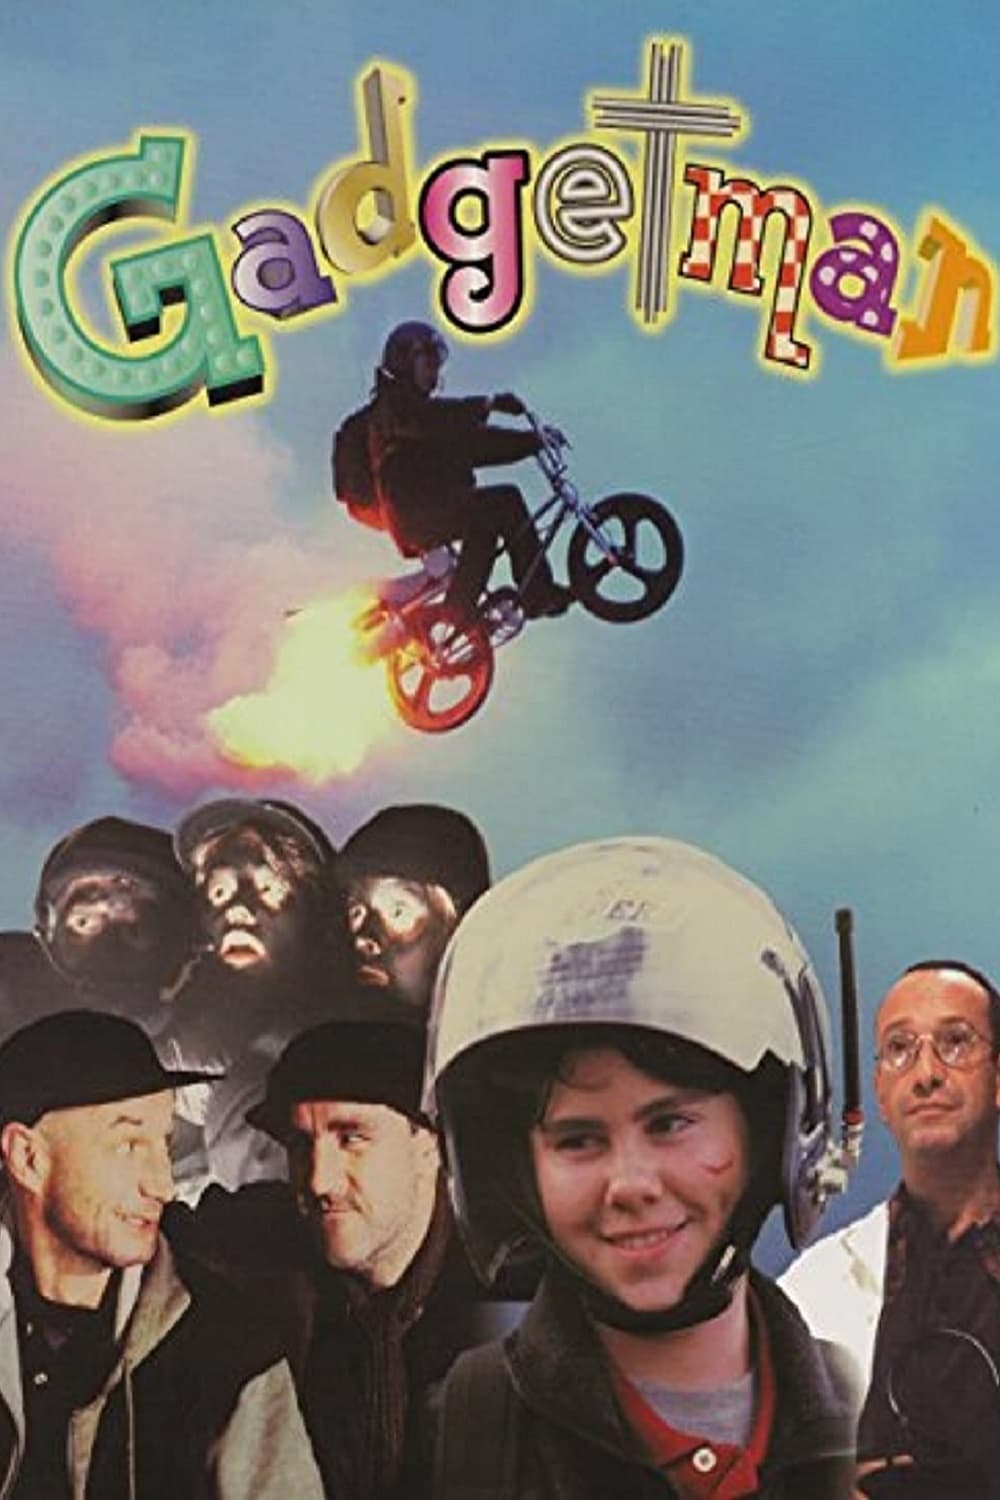 Gadgetman (1996)